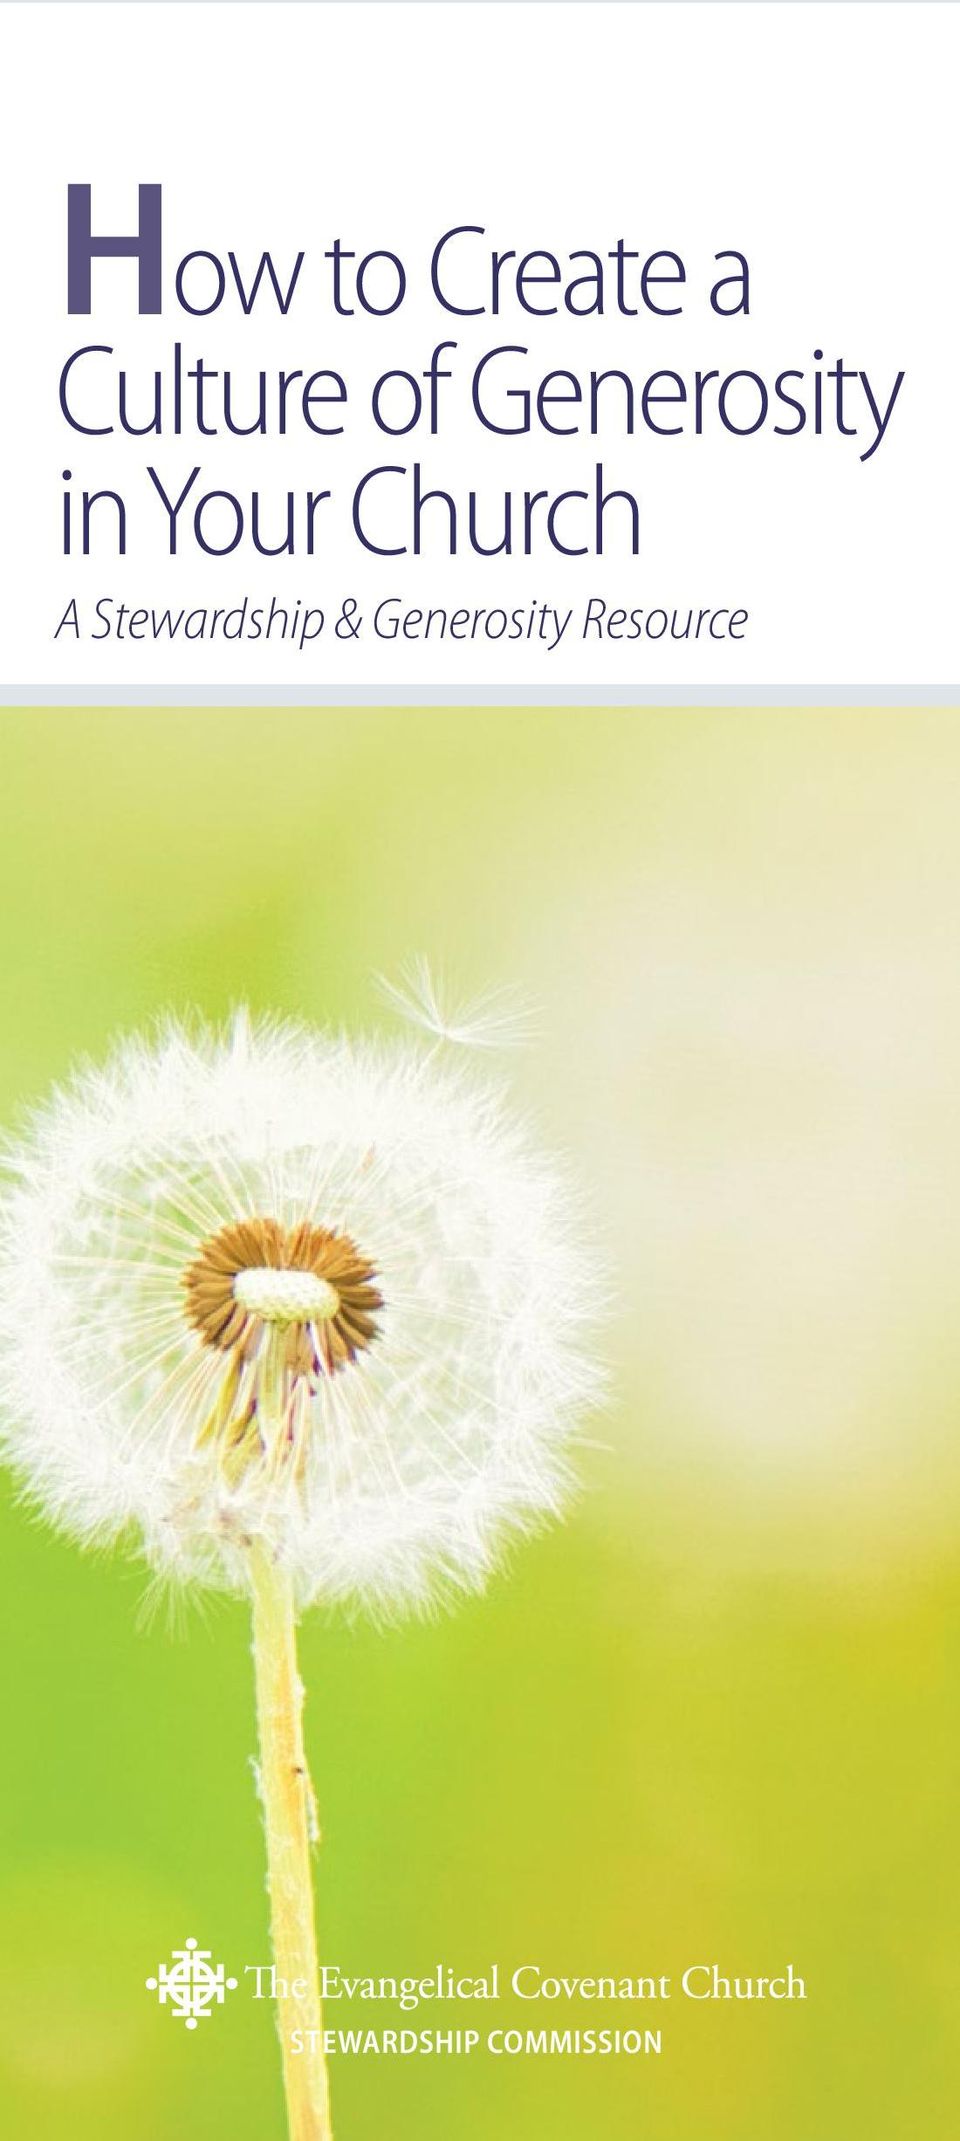 Stewardship & Generosity